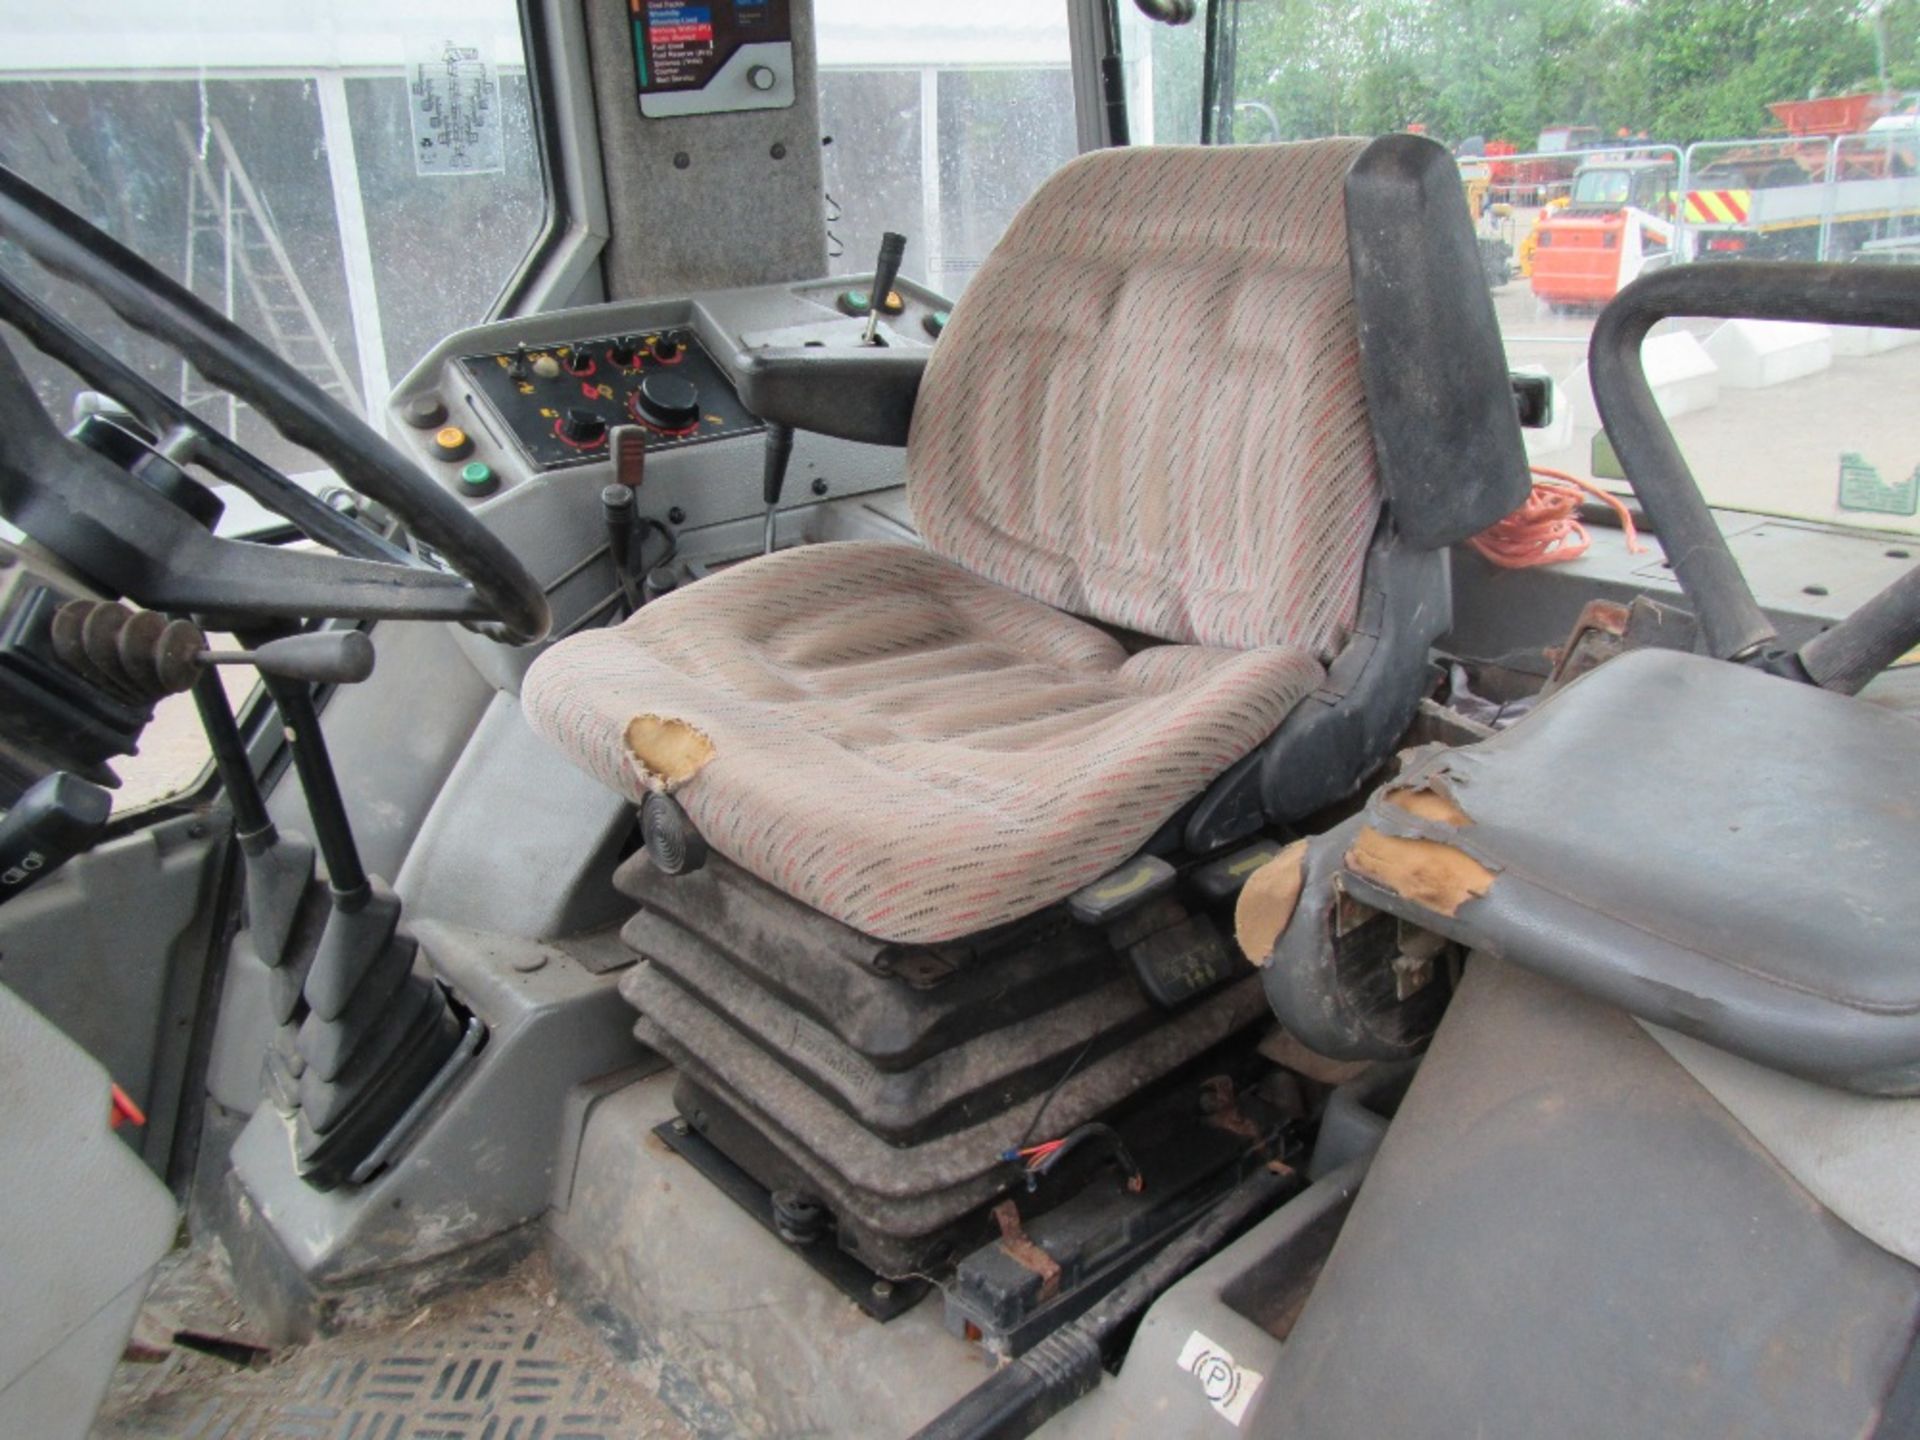 Massey Ferguson 3670 4wd Tractor Reg. No. M107 CVL Hours: 7162 - Image 11 of 16